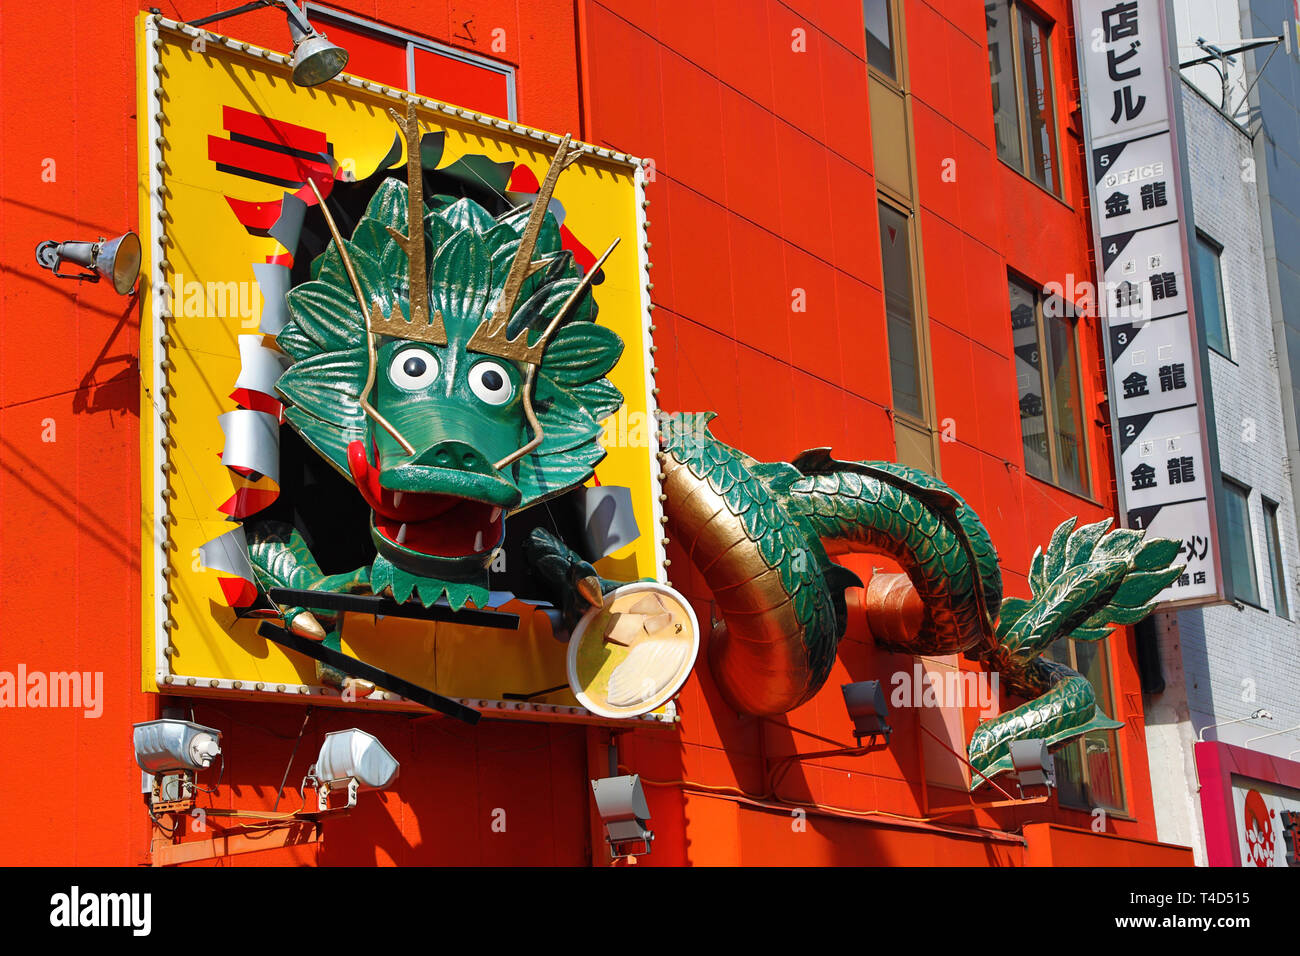 Giant green dragon advertising sign in Dotonbori, Osaka, Japan Stock Photo